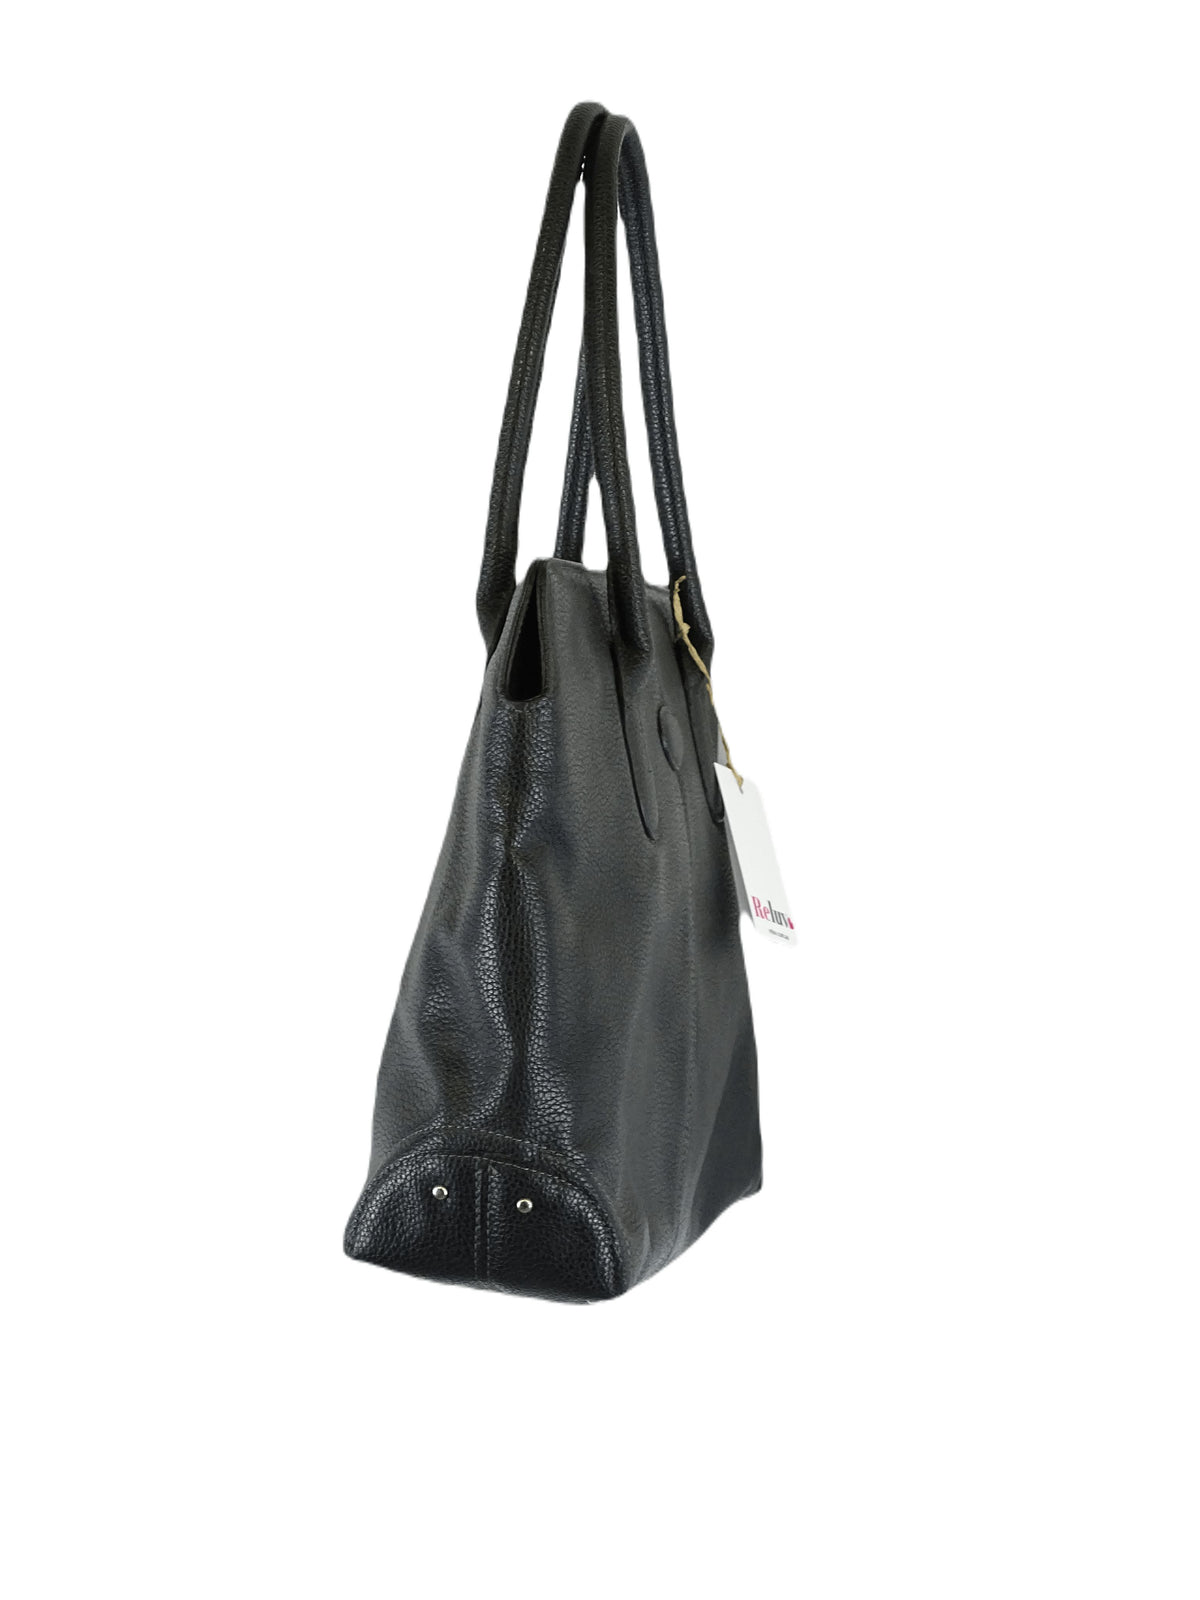 Boutique Black Leather Handbag